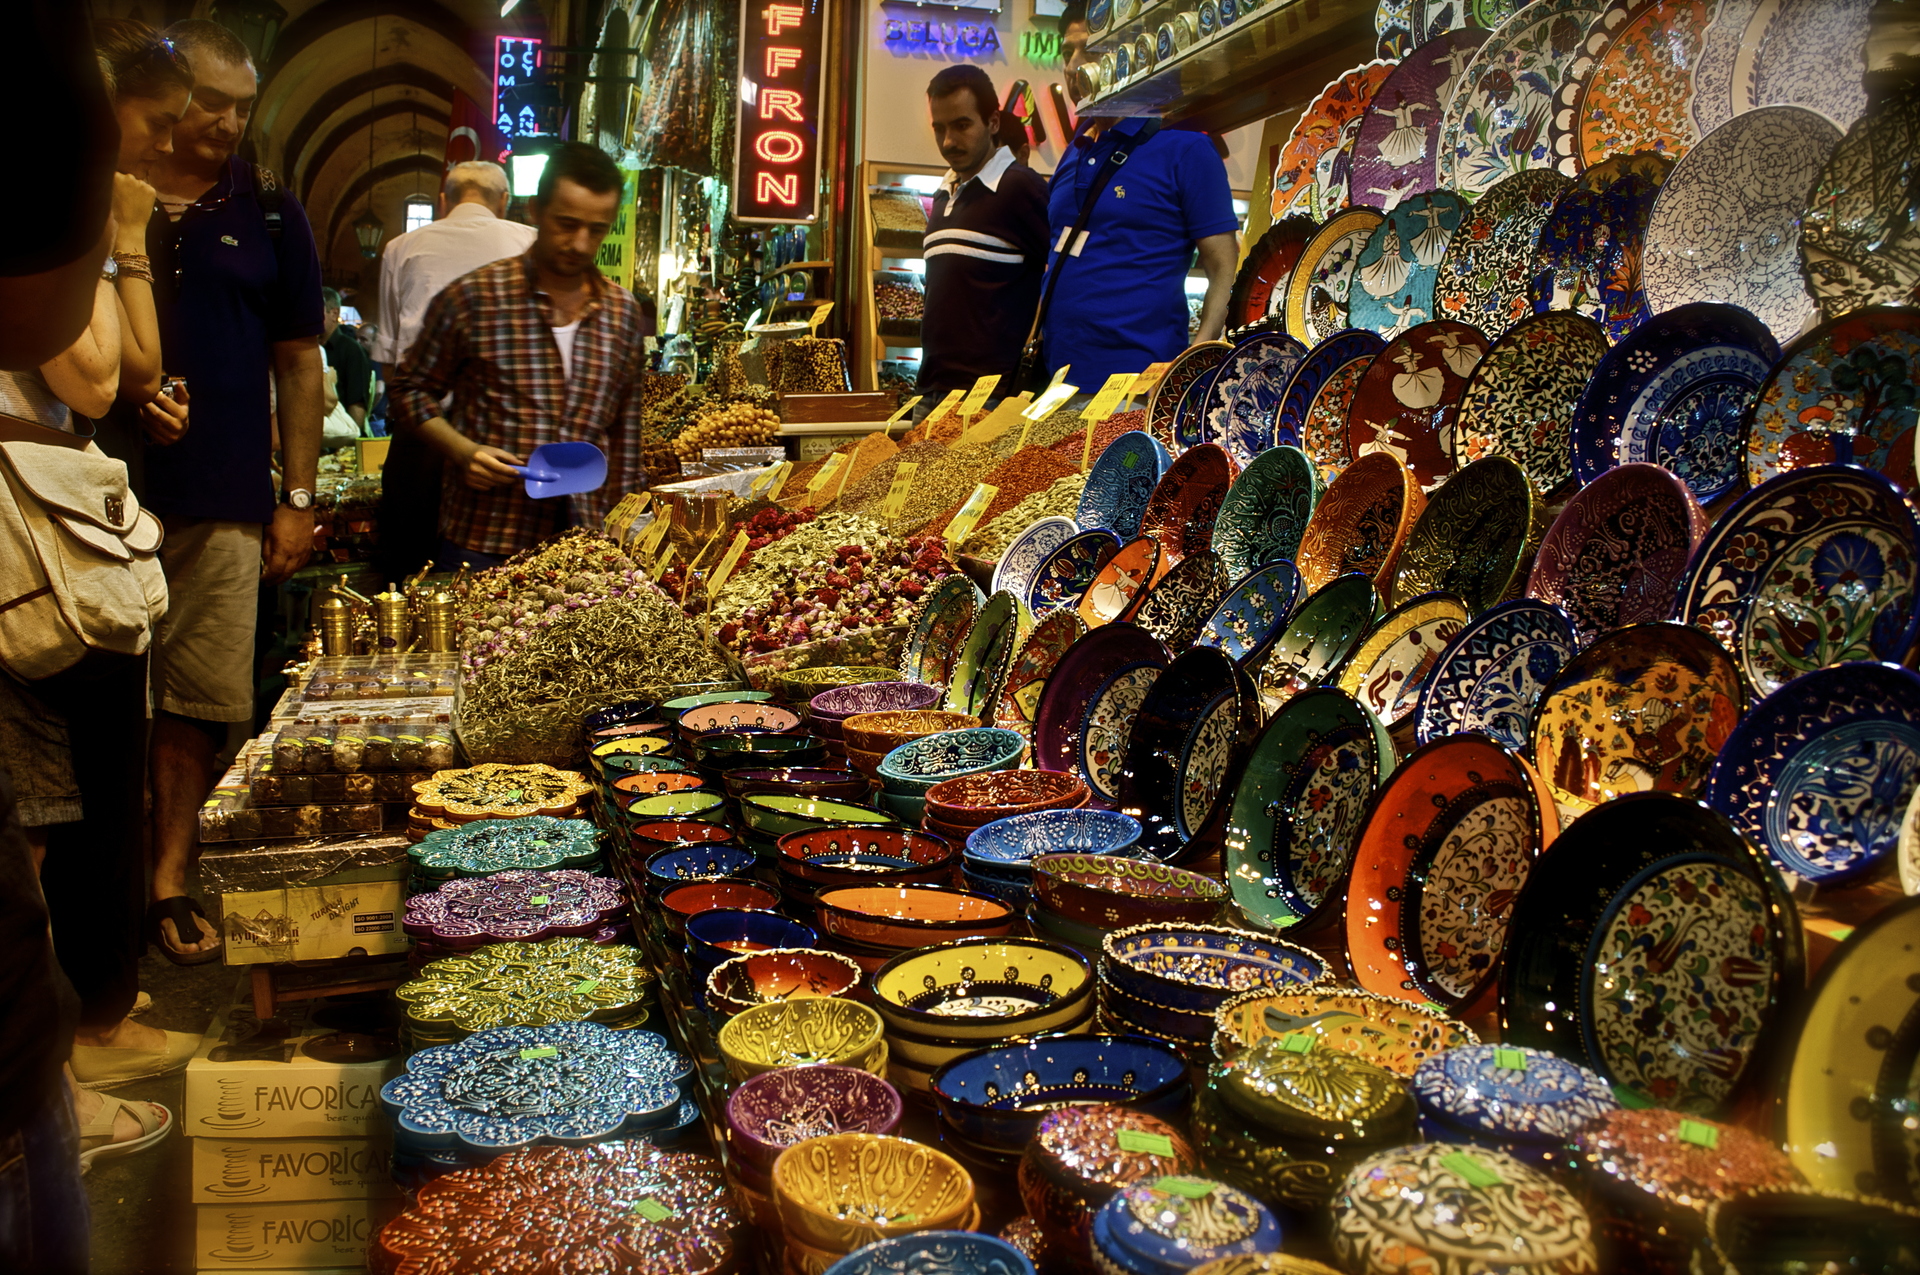 The Egyptian Bazaar by mehmet avincan - Downloaded from 500px